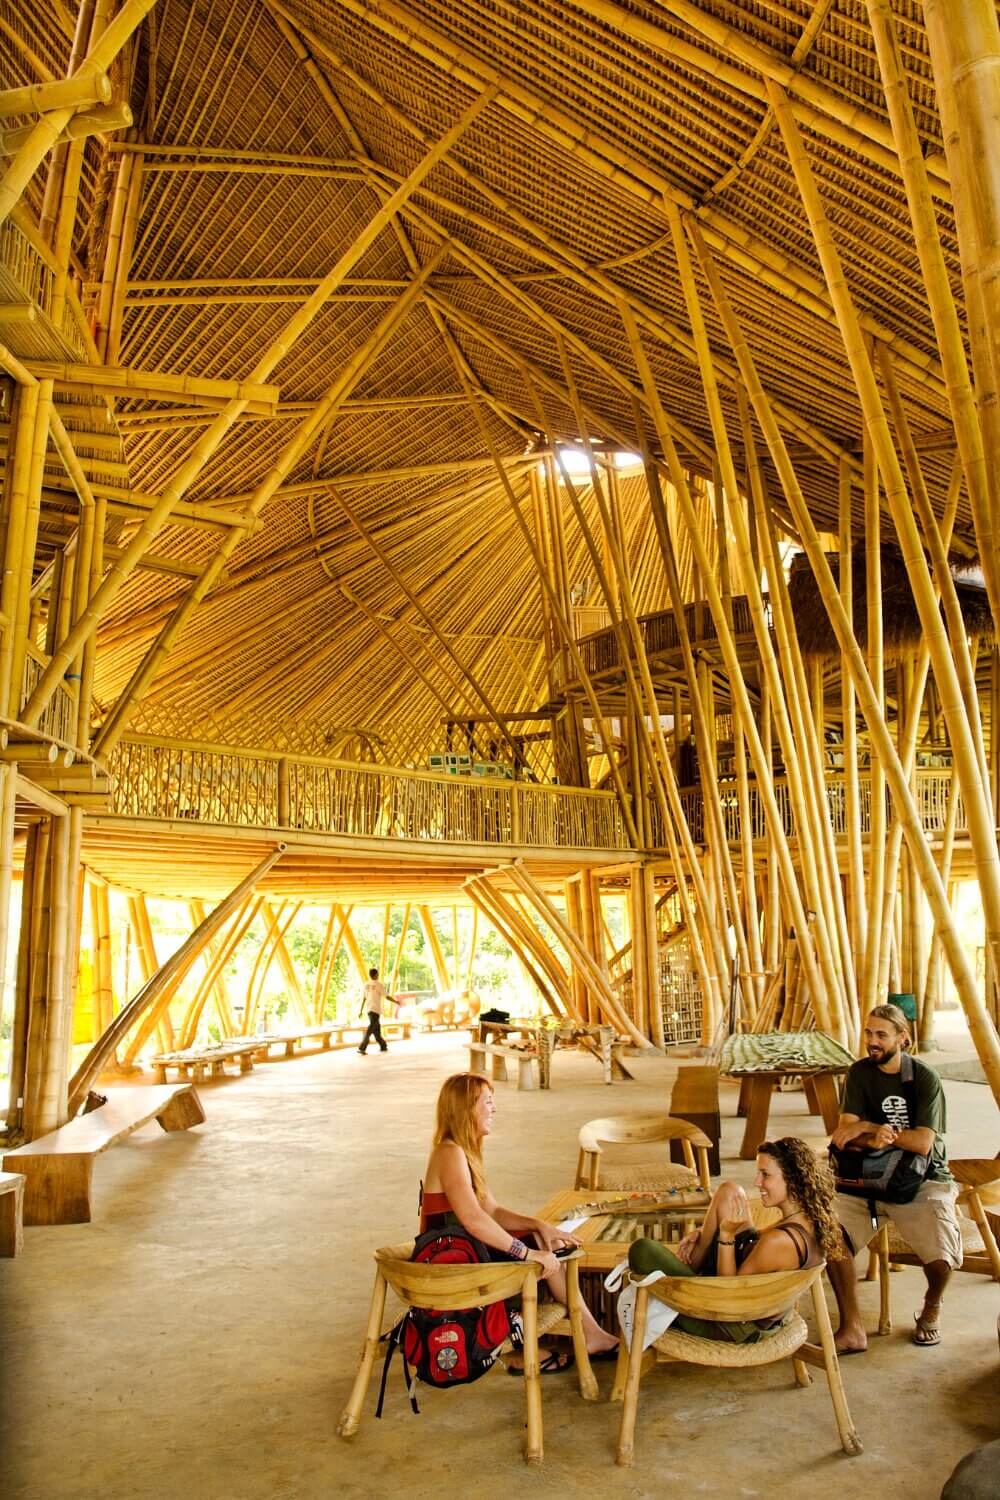 Cabin made of bamboo